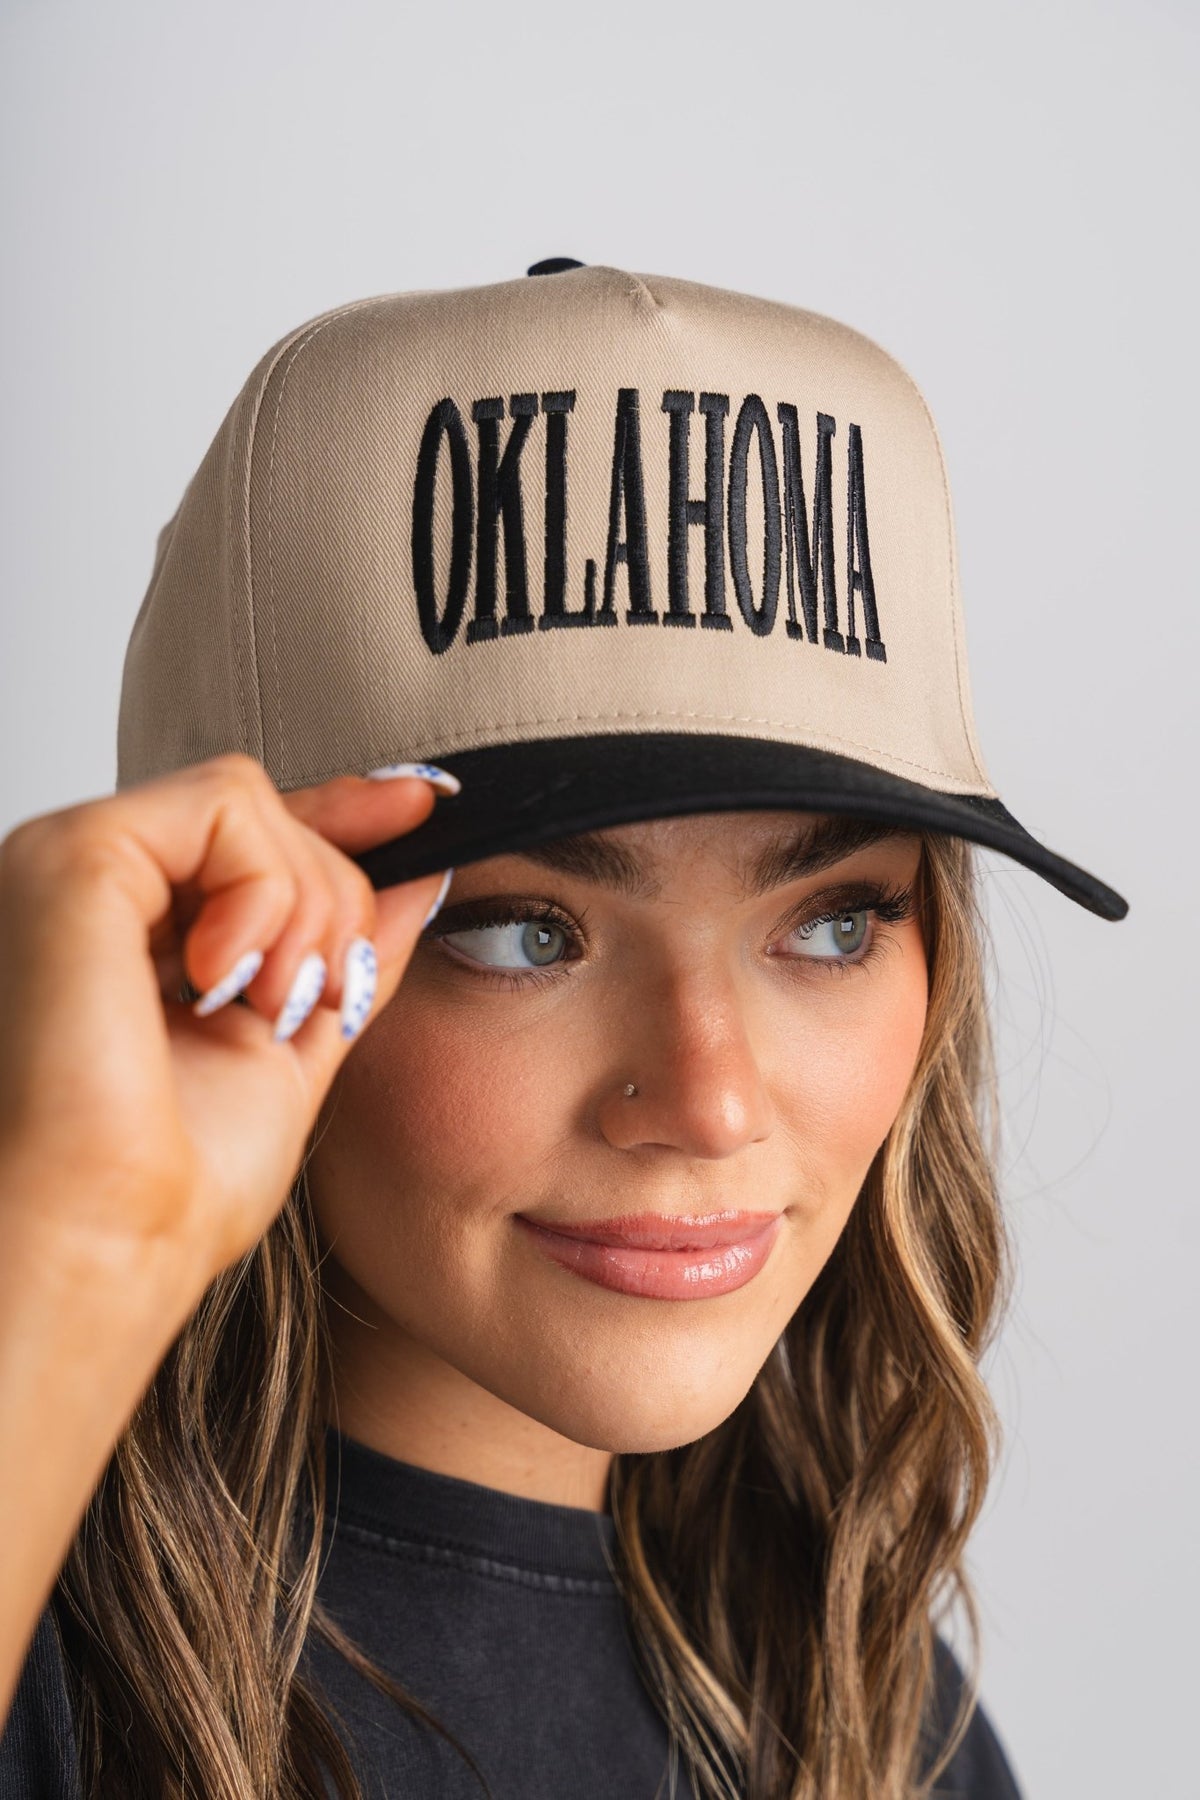 Oklahoma vintage hat black/khaki - Trendy Hats at Lush Fashion Lounge Boutique in Oklahoma City